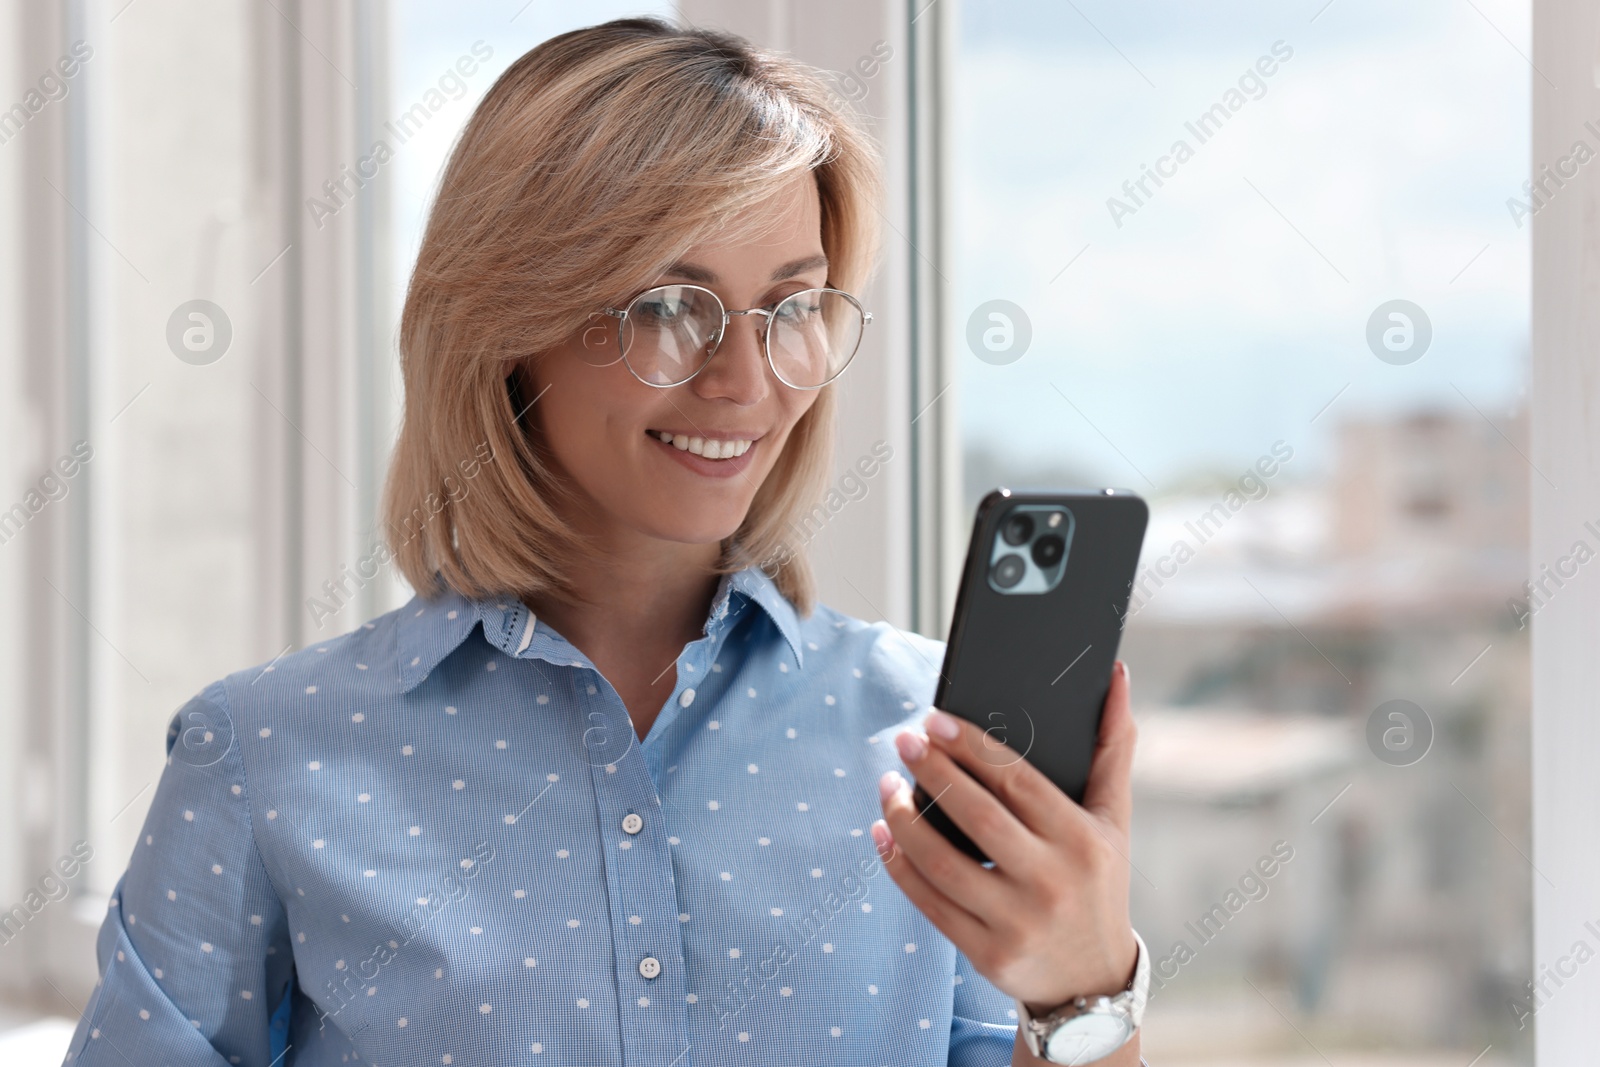 Photo of Happy woman using mobile phone near window indoors